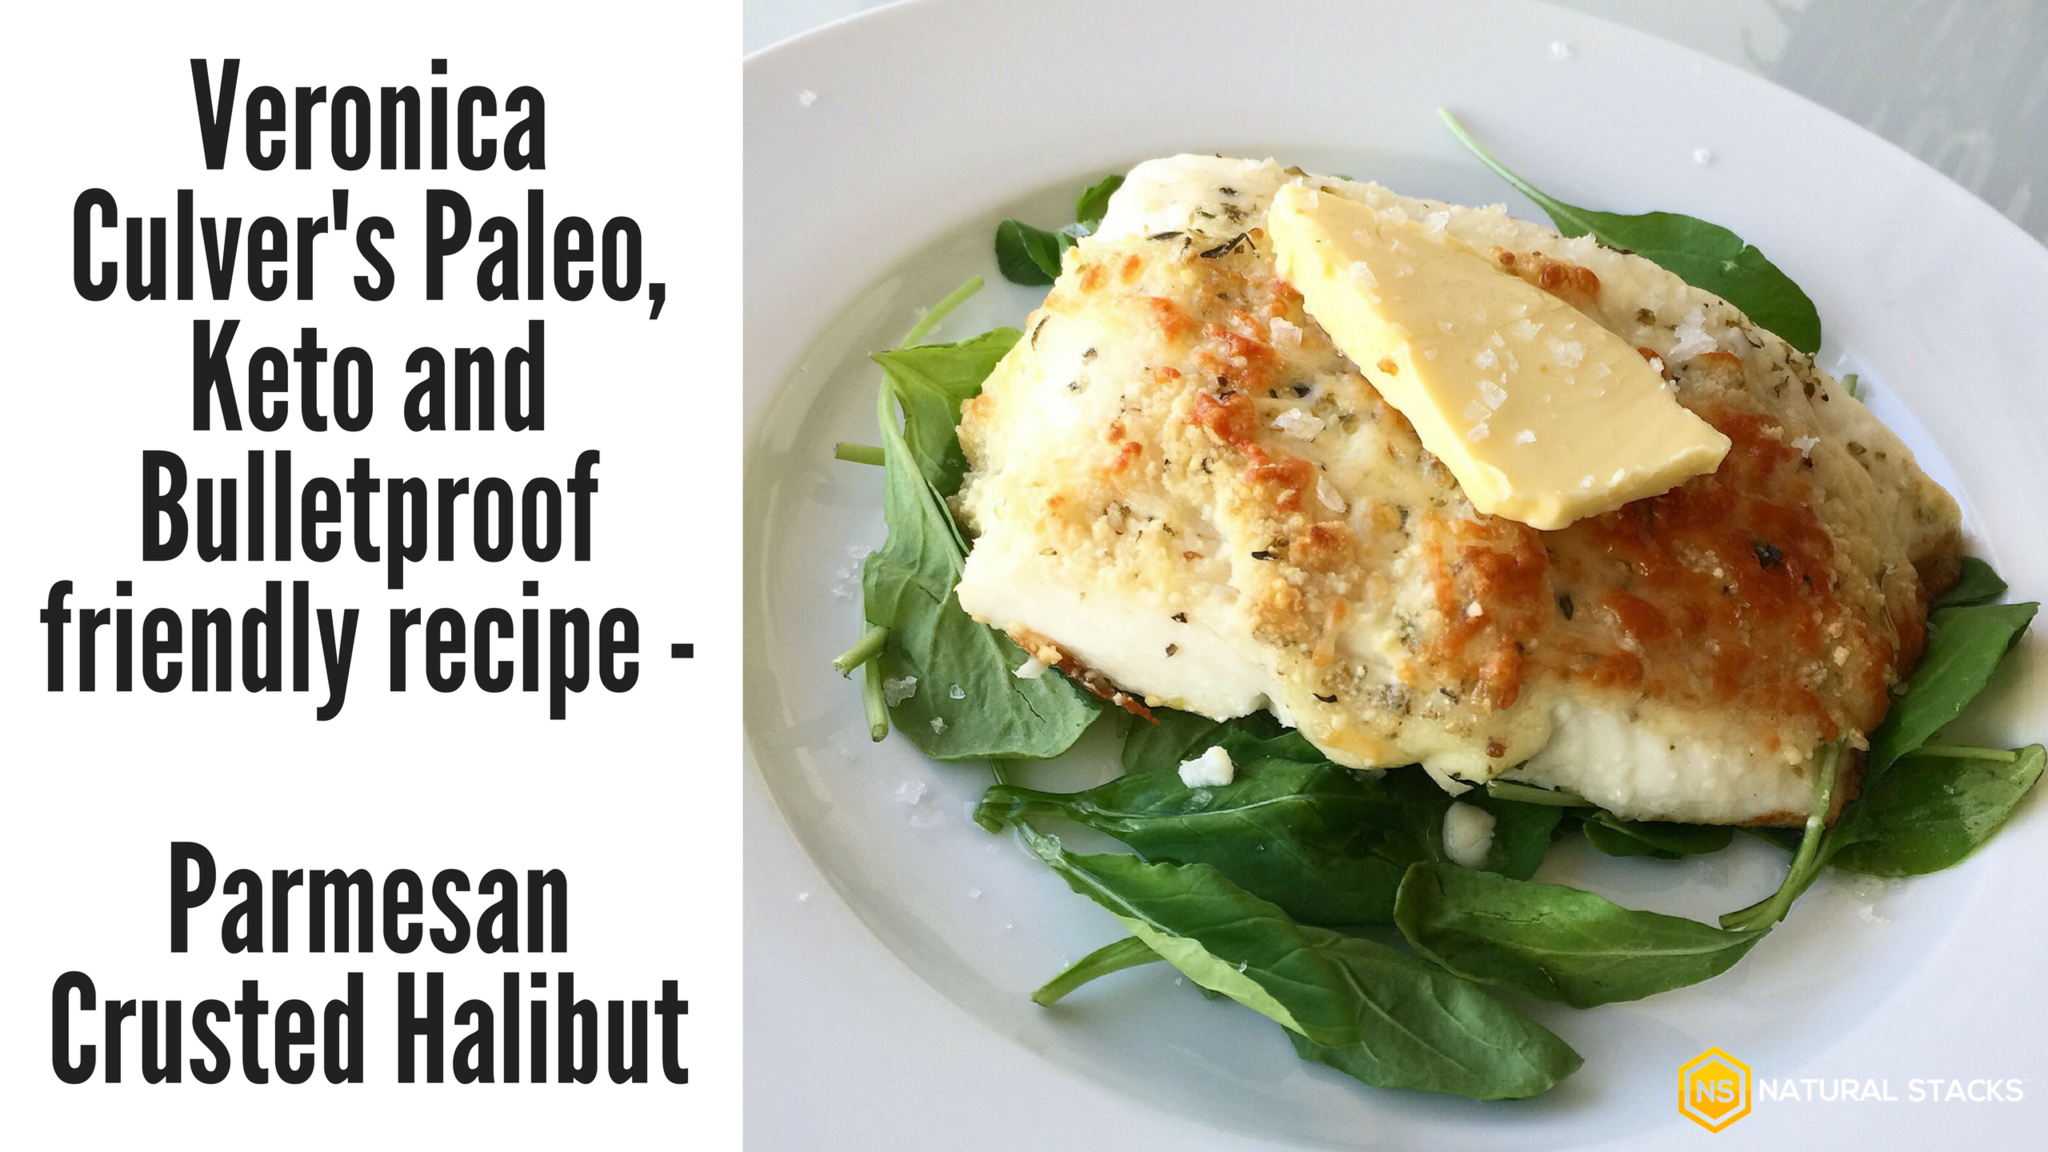 Veronica Culver's Paleo, Keto and Bulletproof Friendly Recipe: Parmesan Crusted Halibut